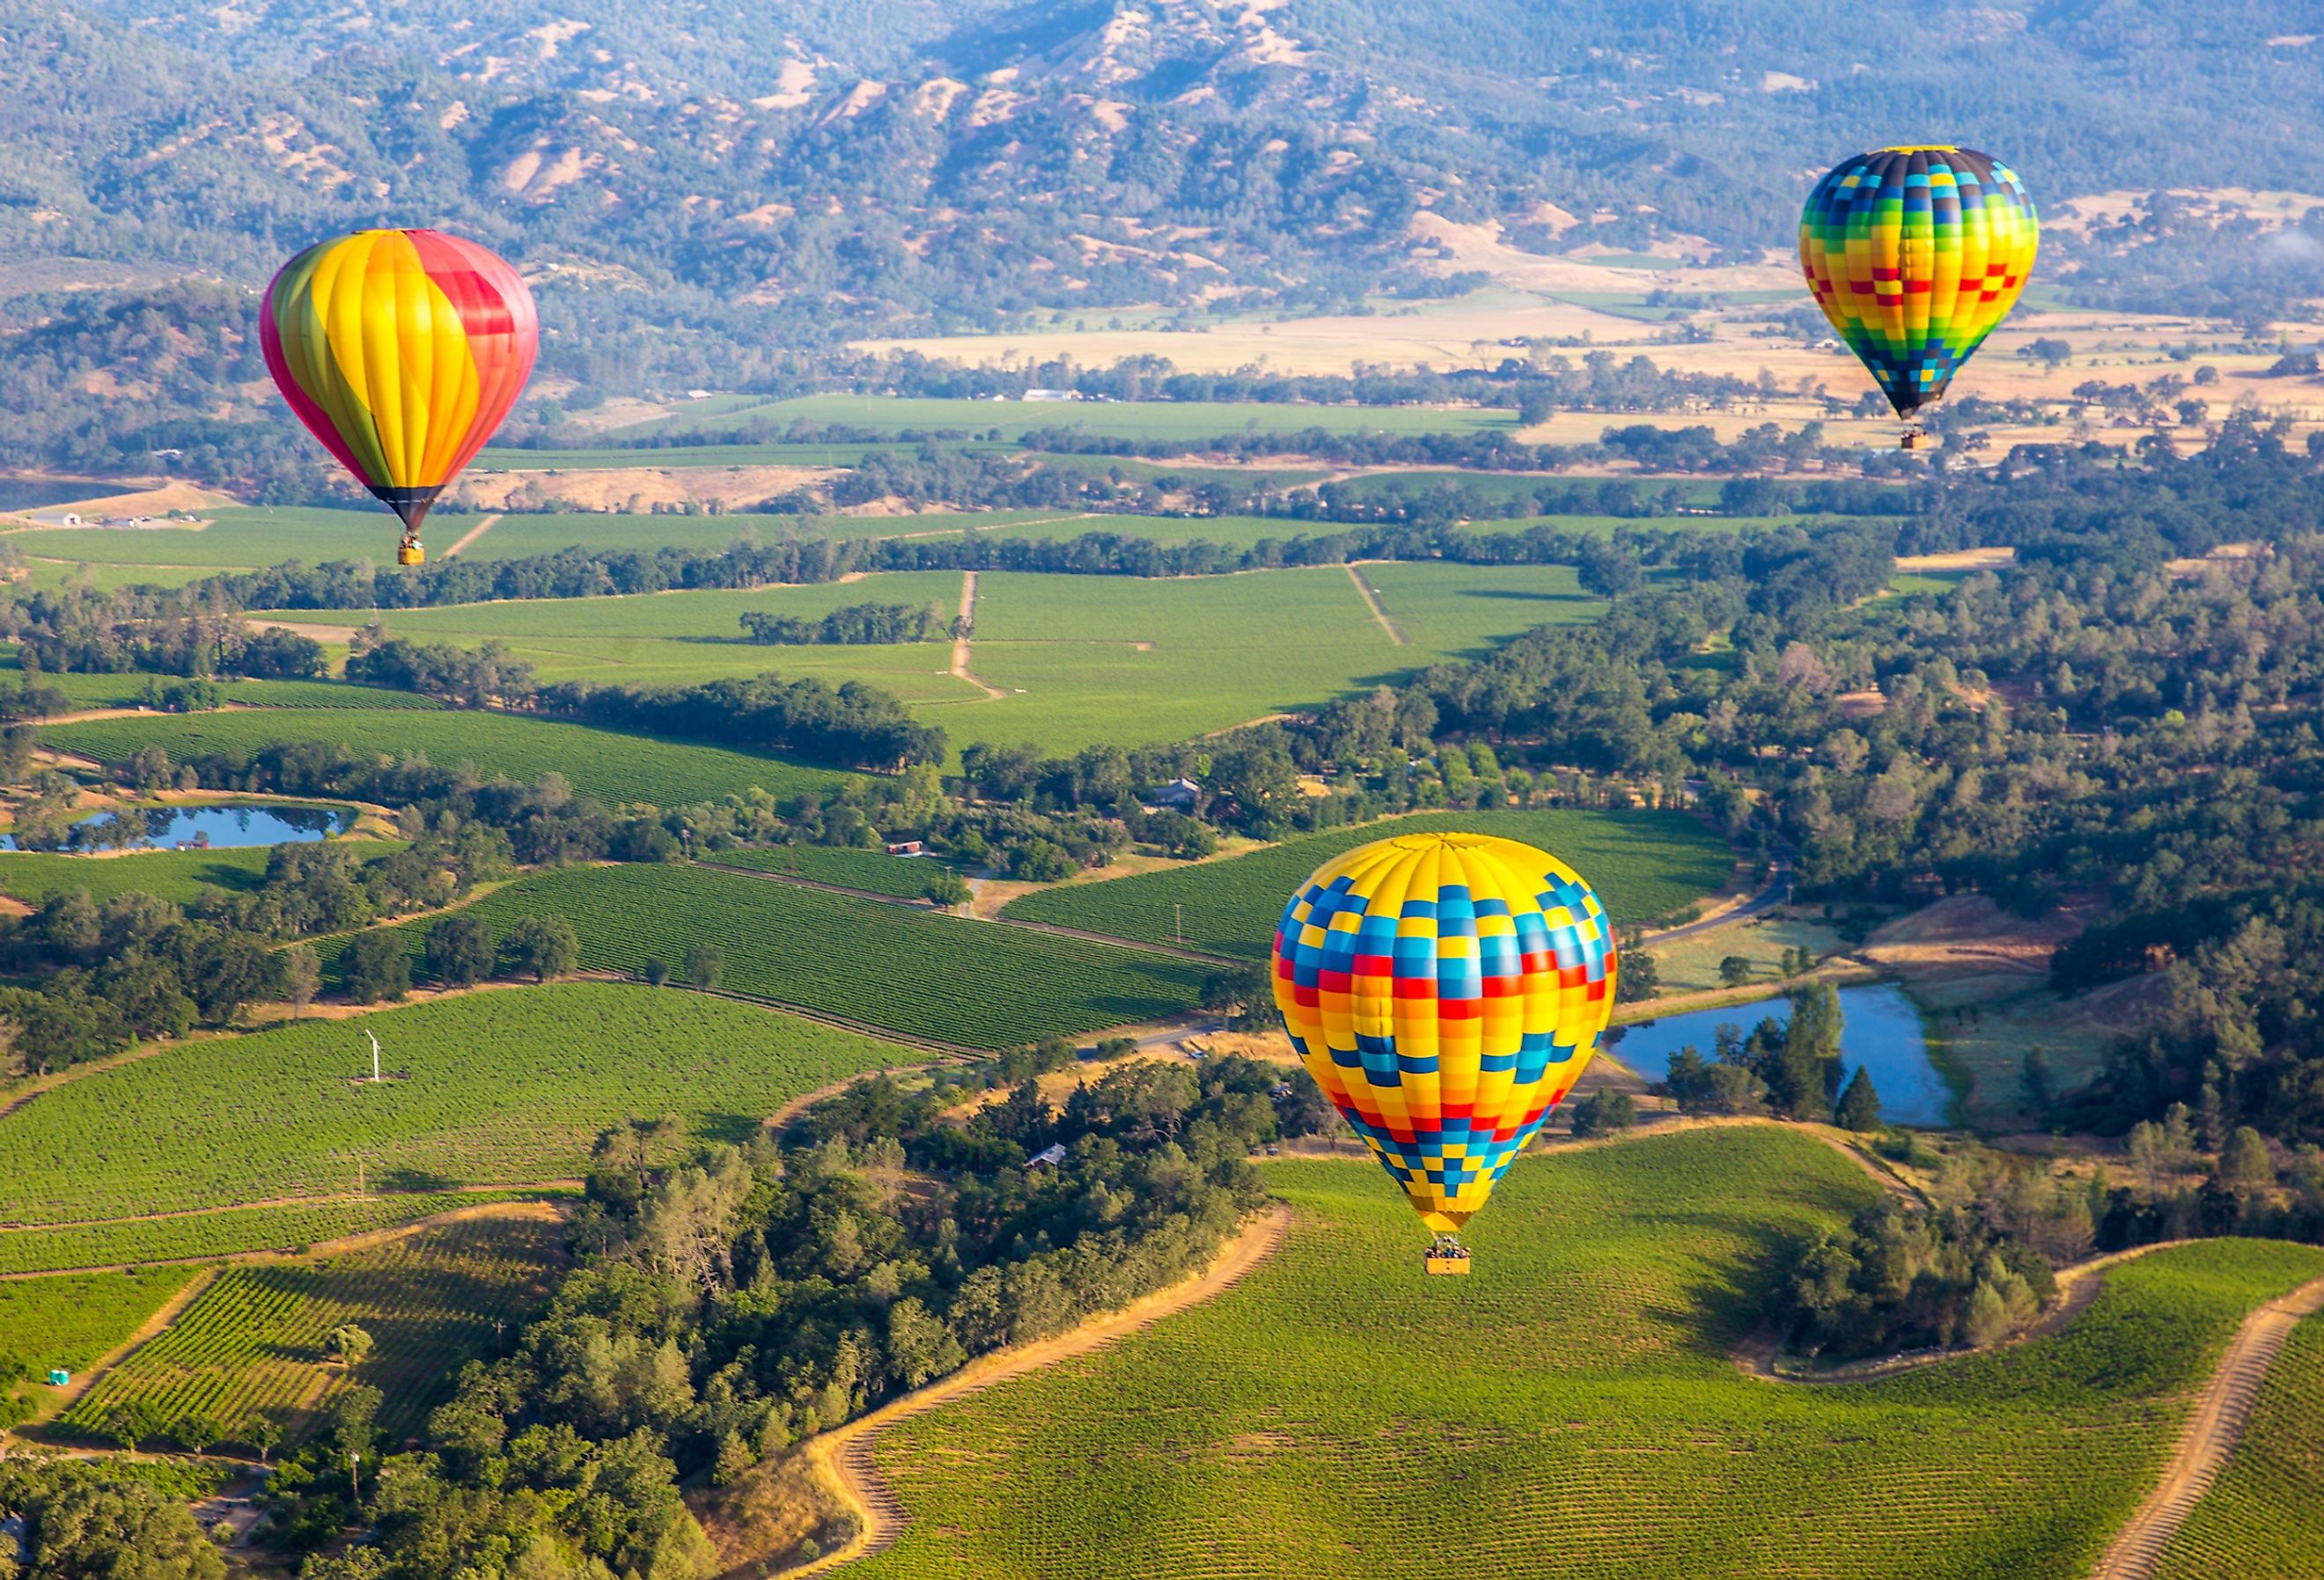 Hot Air Balloon Trip in Napa Valley, California. Image credit cheng cheng via Shutterstock